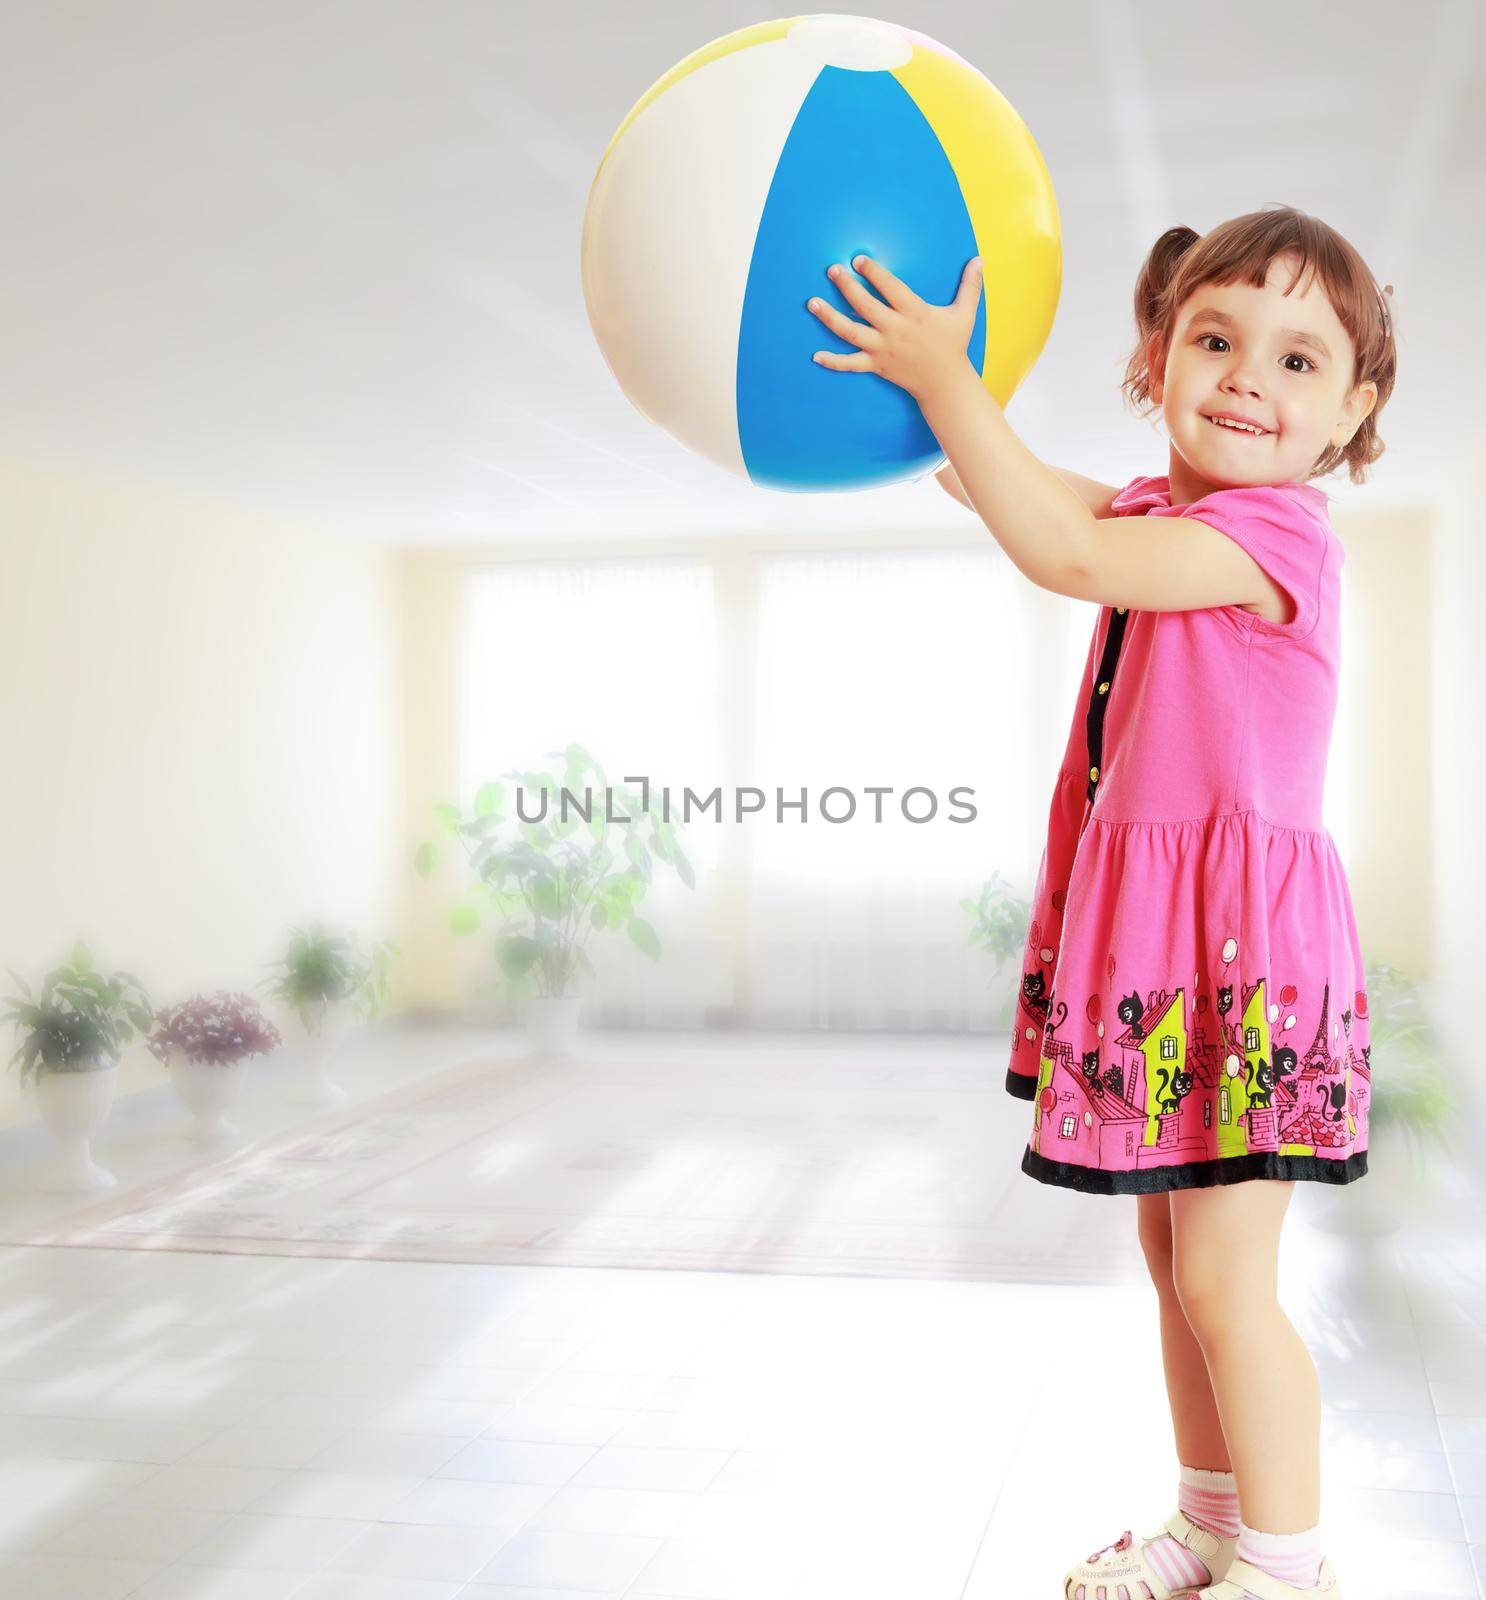 The girl with the ball turned sideways by kolesnikov_studio